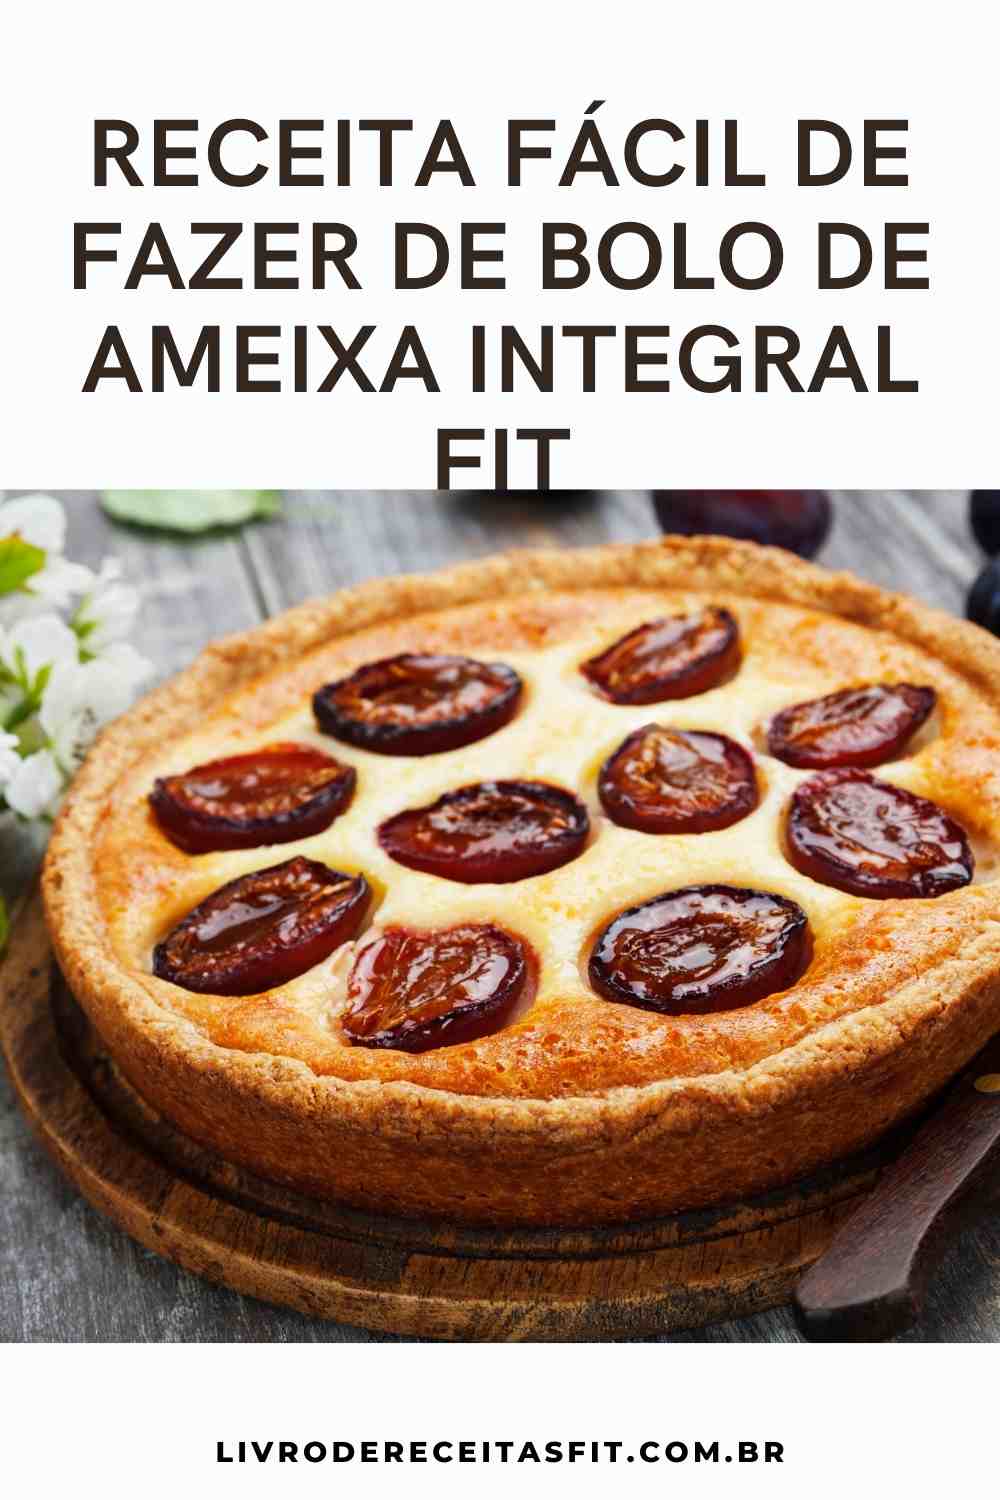 You are currently viewing Receita fácil de fazer de bolo de ameixa integral fit